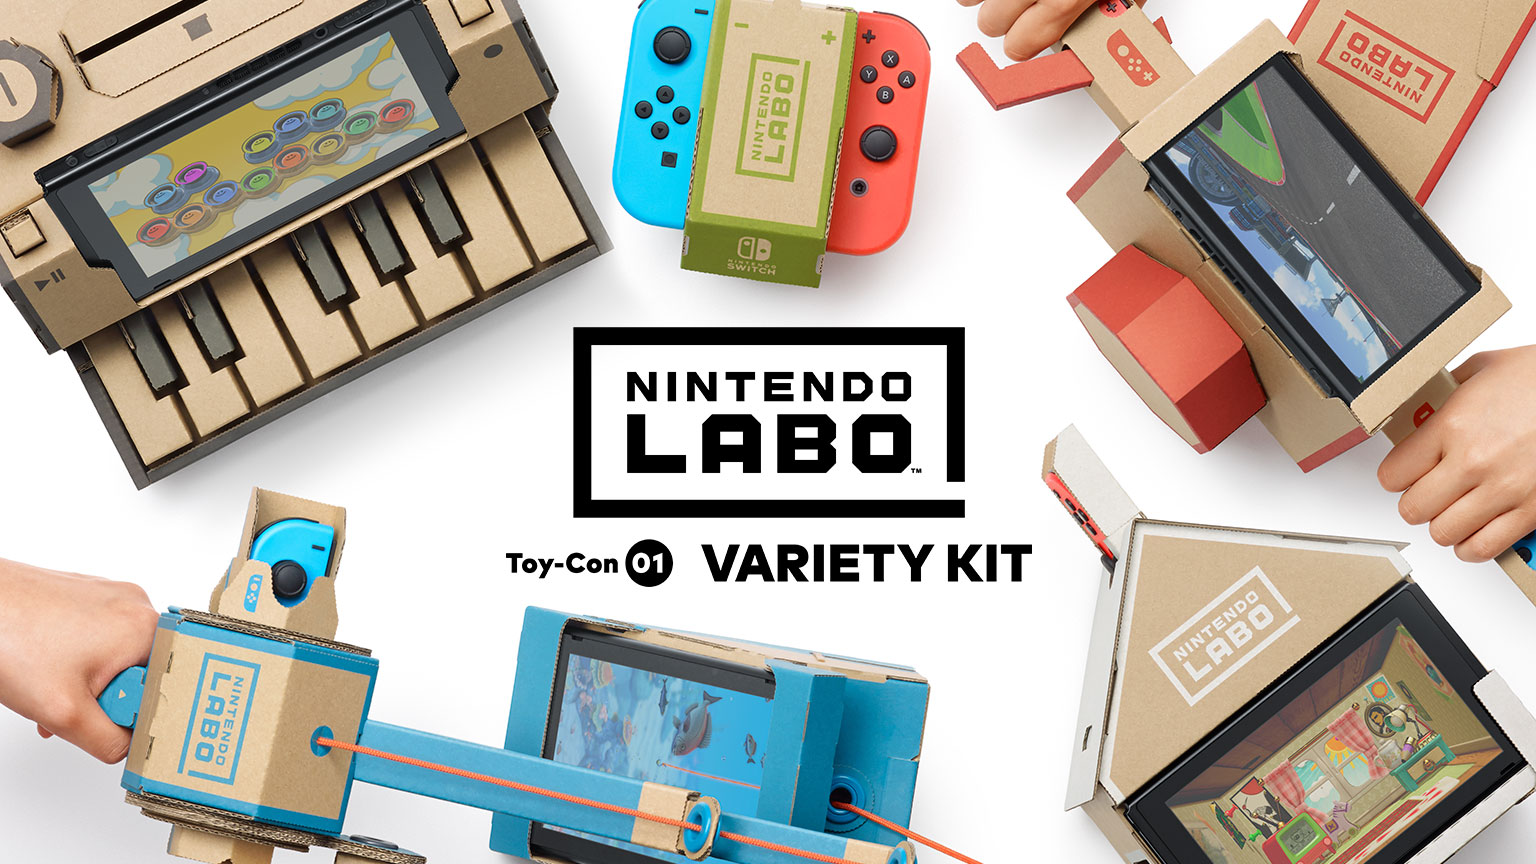 Nintendo Toy-Con 01 Variety Kit | Nintendo Switch | Nintendo